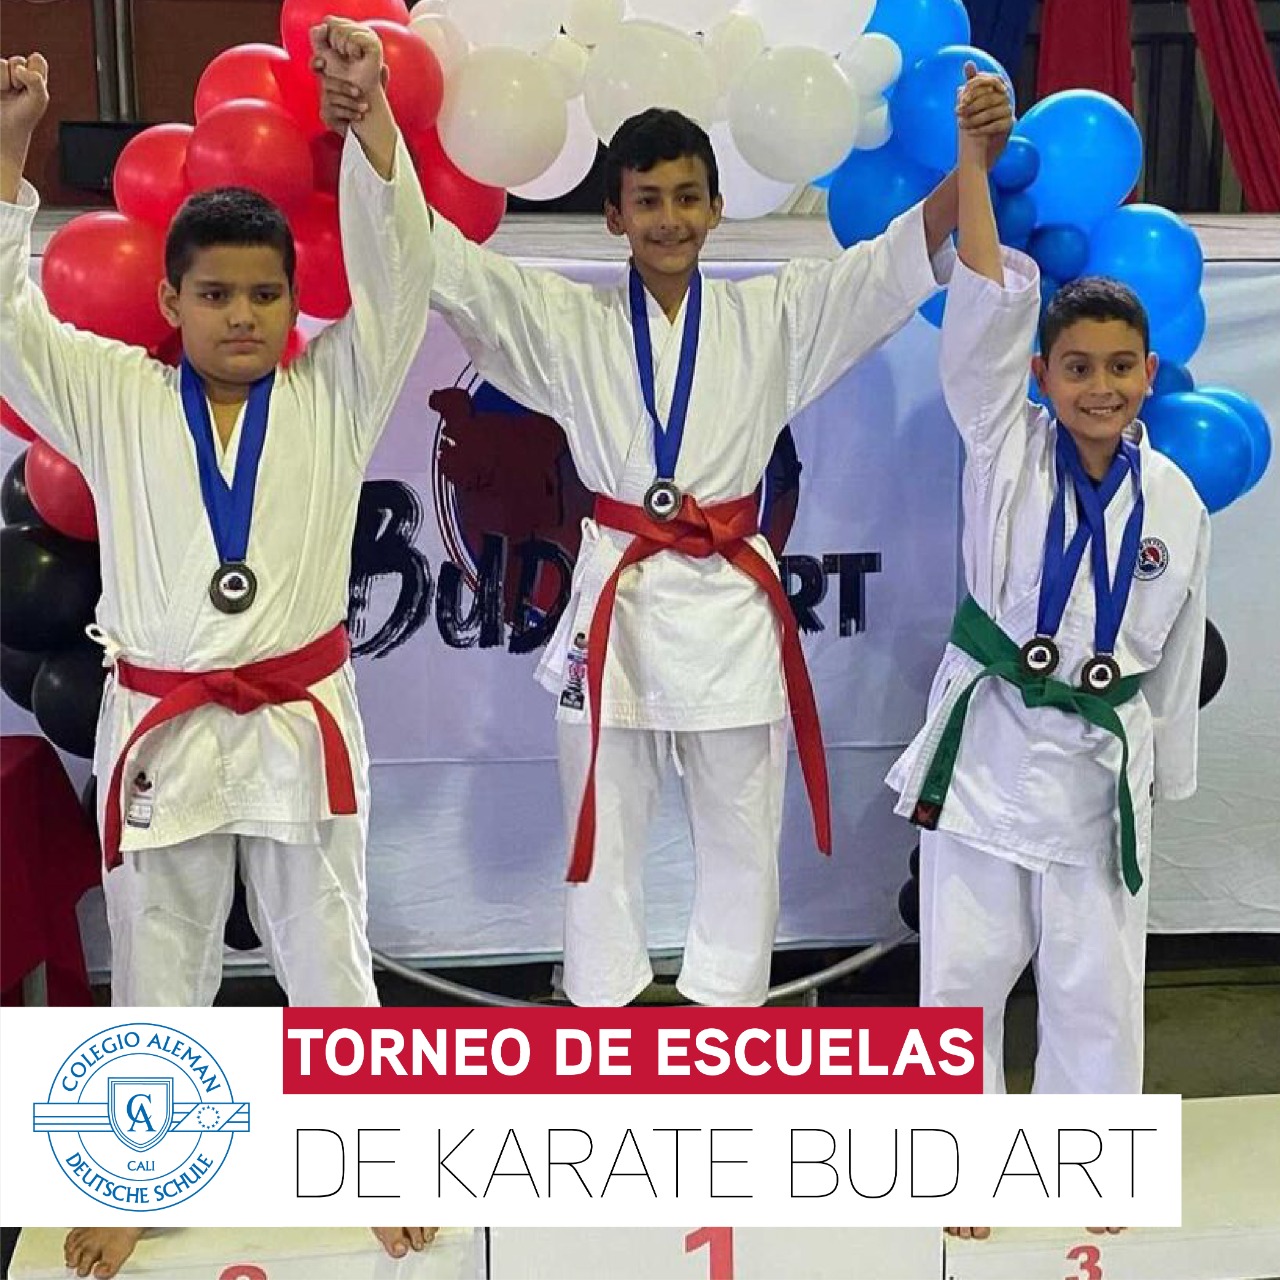 Torneo de Escuelas de Karate Bud Art,